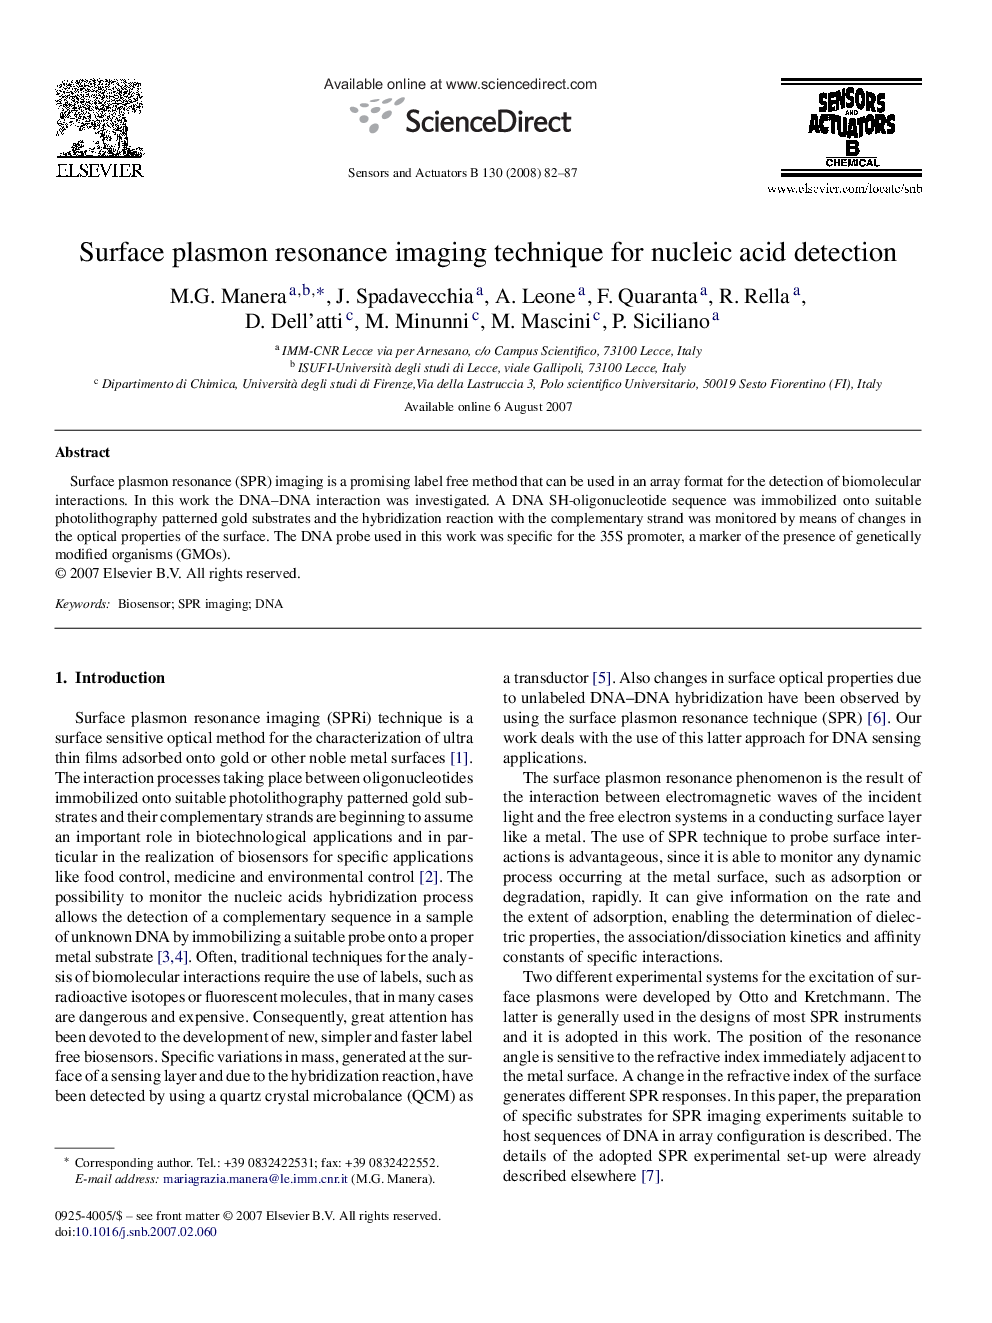 Surface plasmon resonance imaging technique for nucleic acid detection